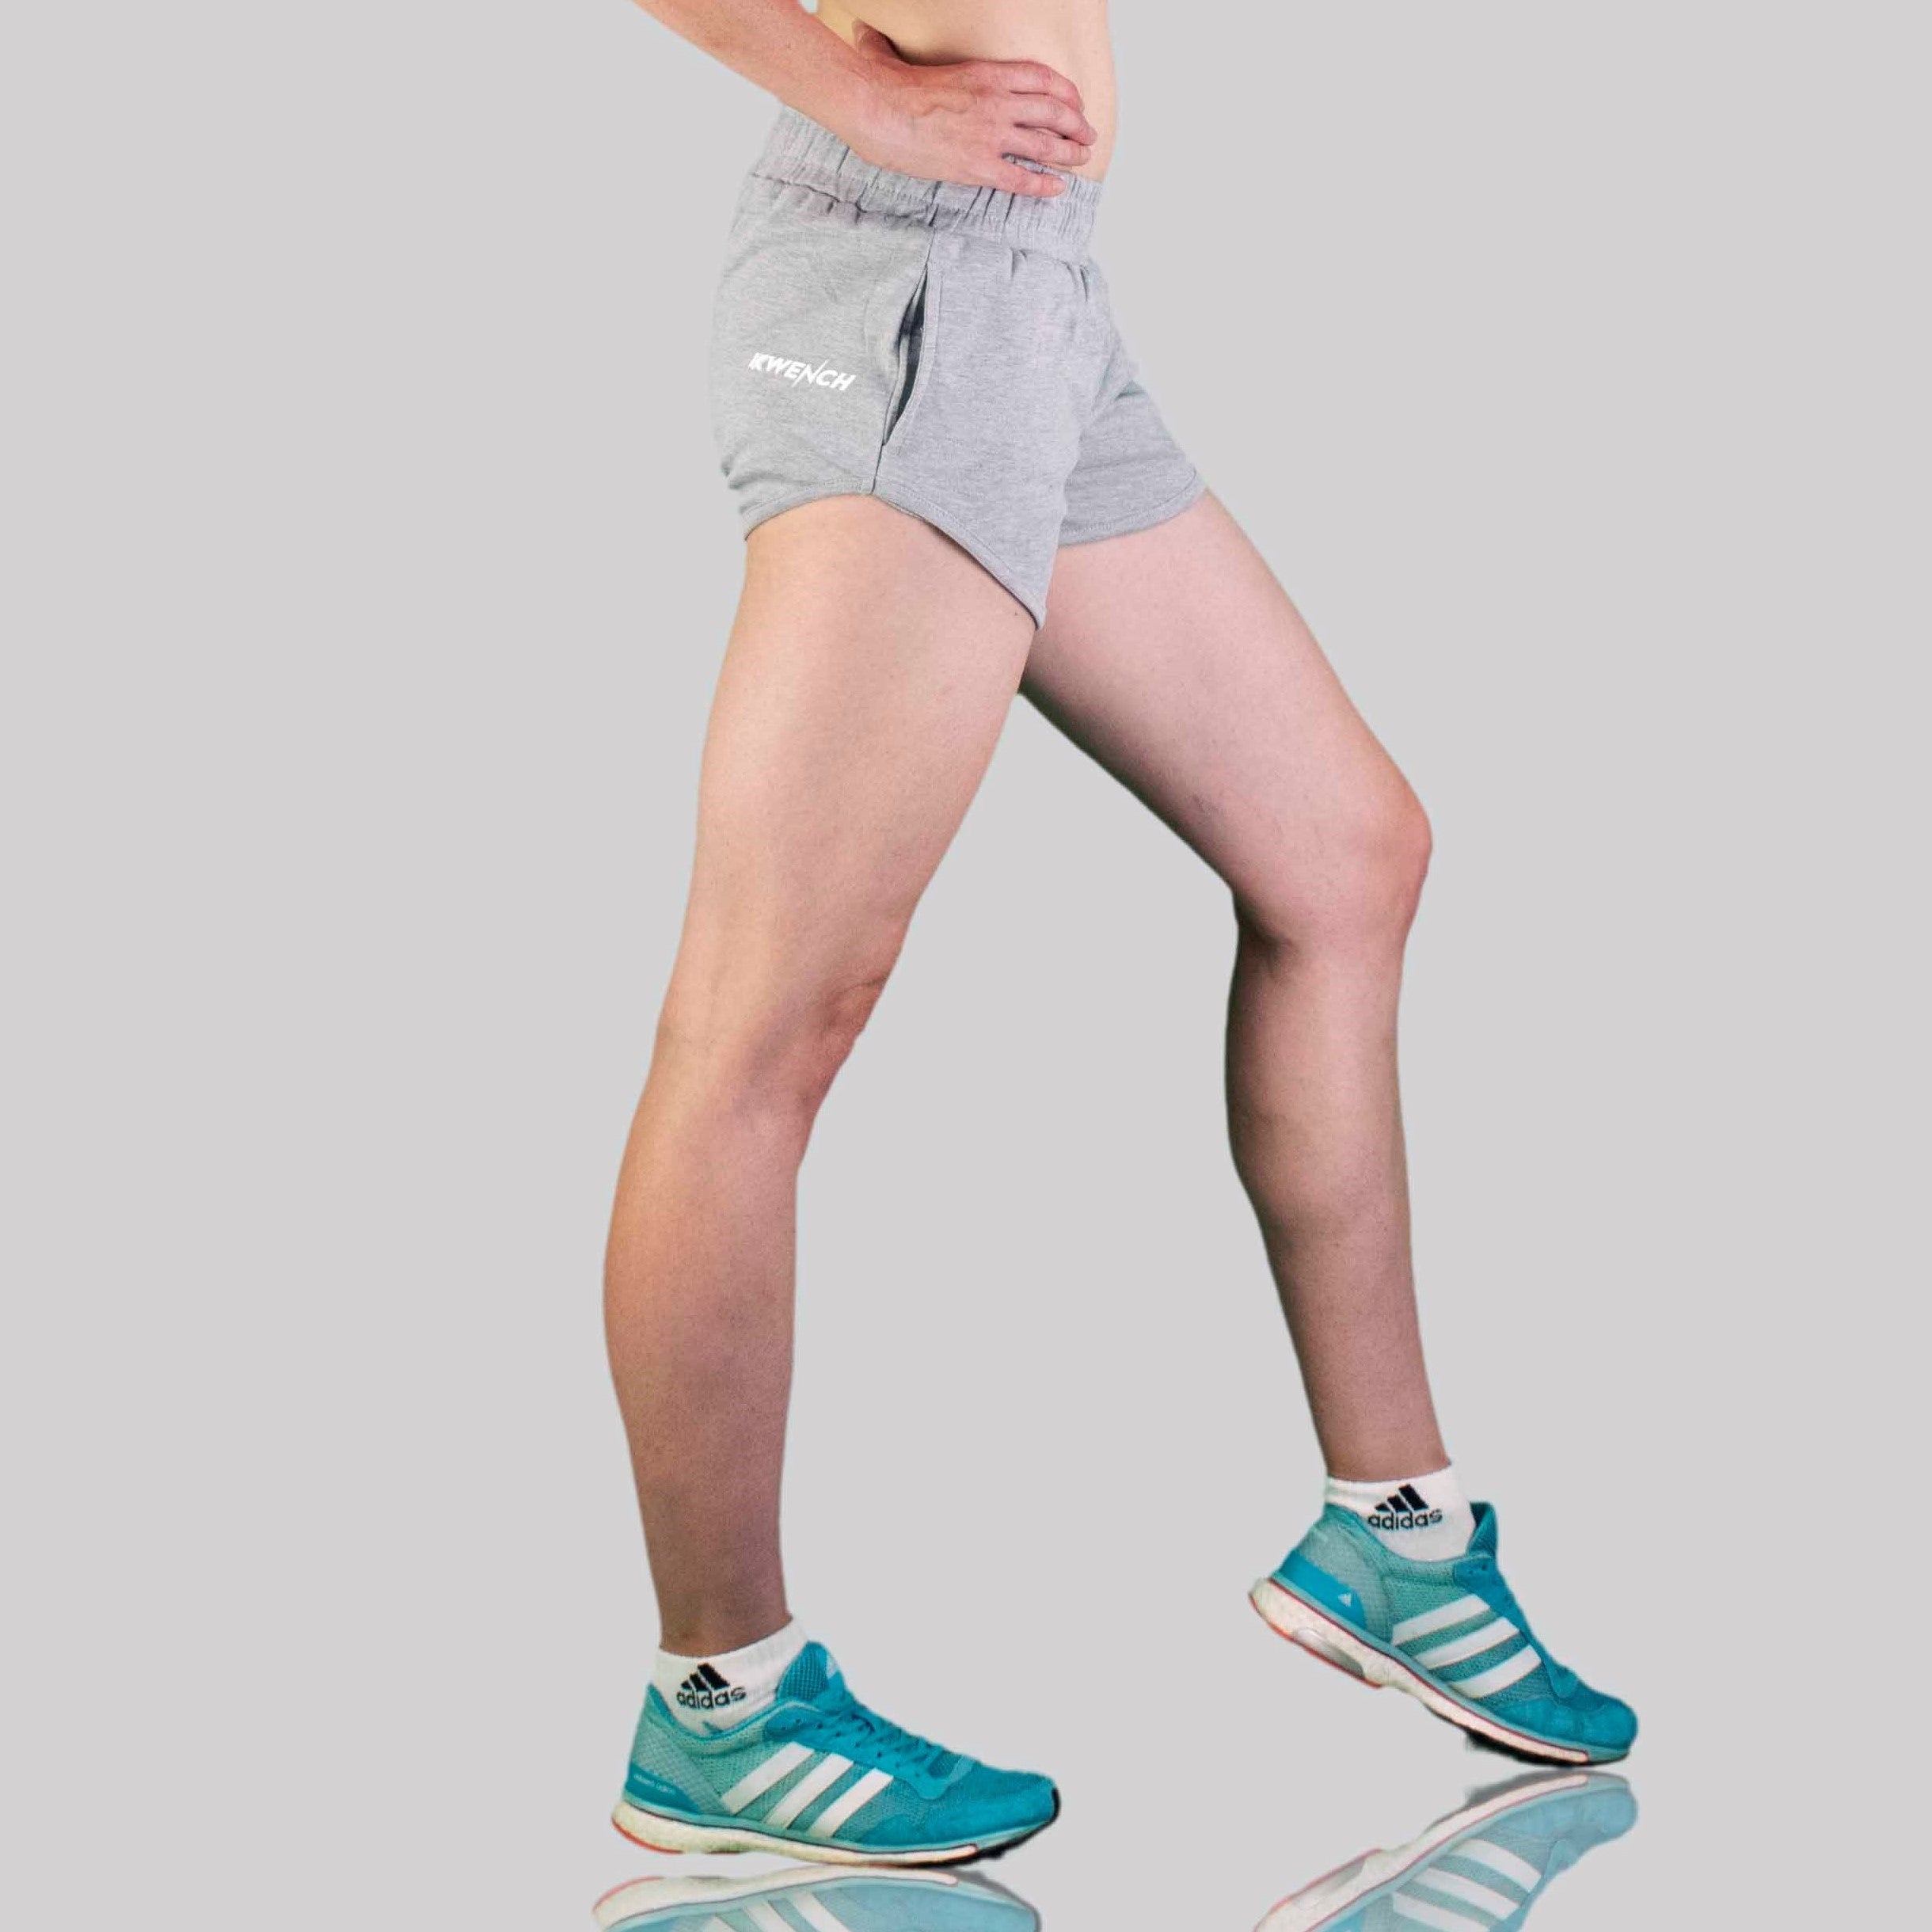 Kwench womens running gym yoga shorts 